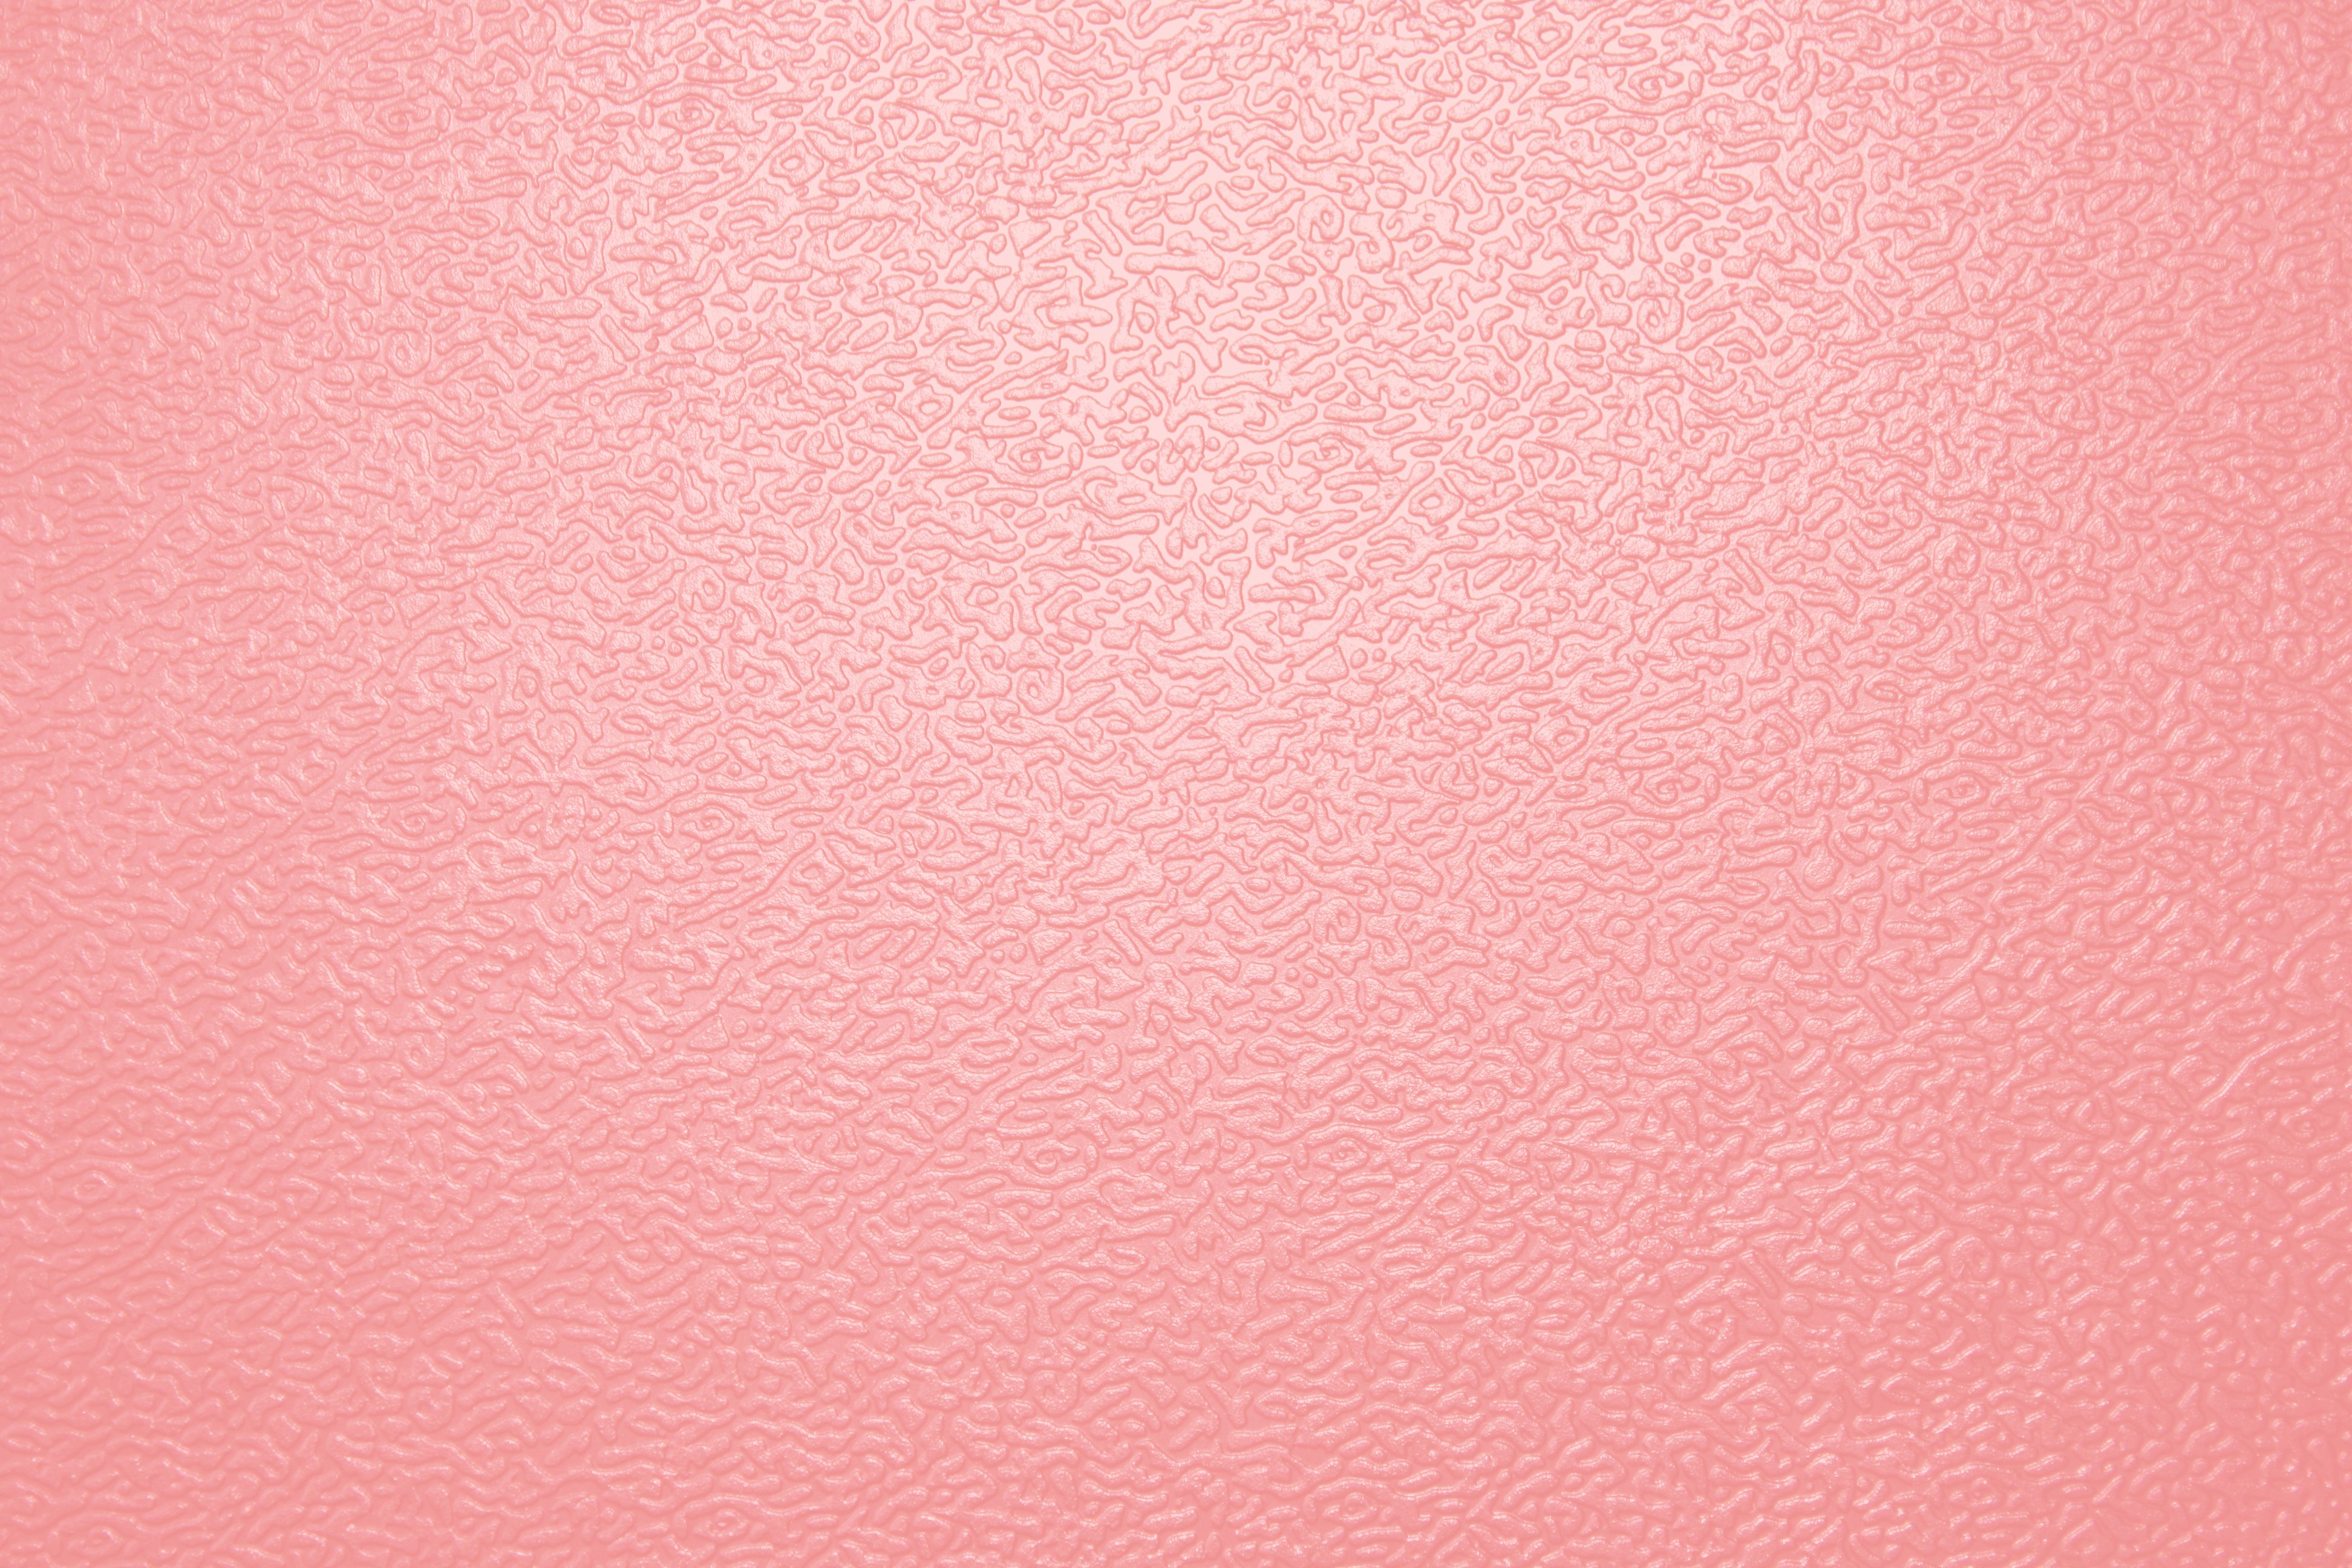 Digital Textured Salmon Pink Color Background Stock Illustration 713098840